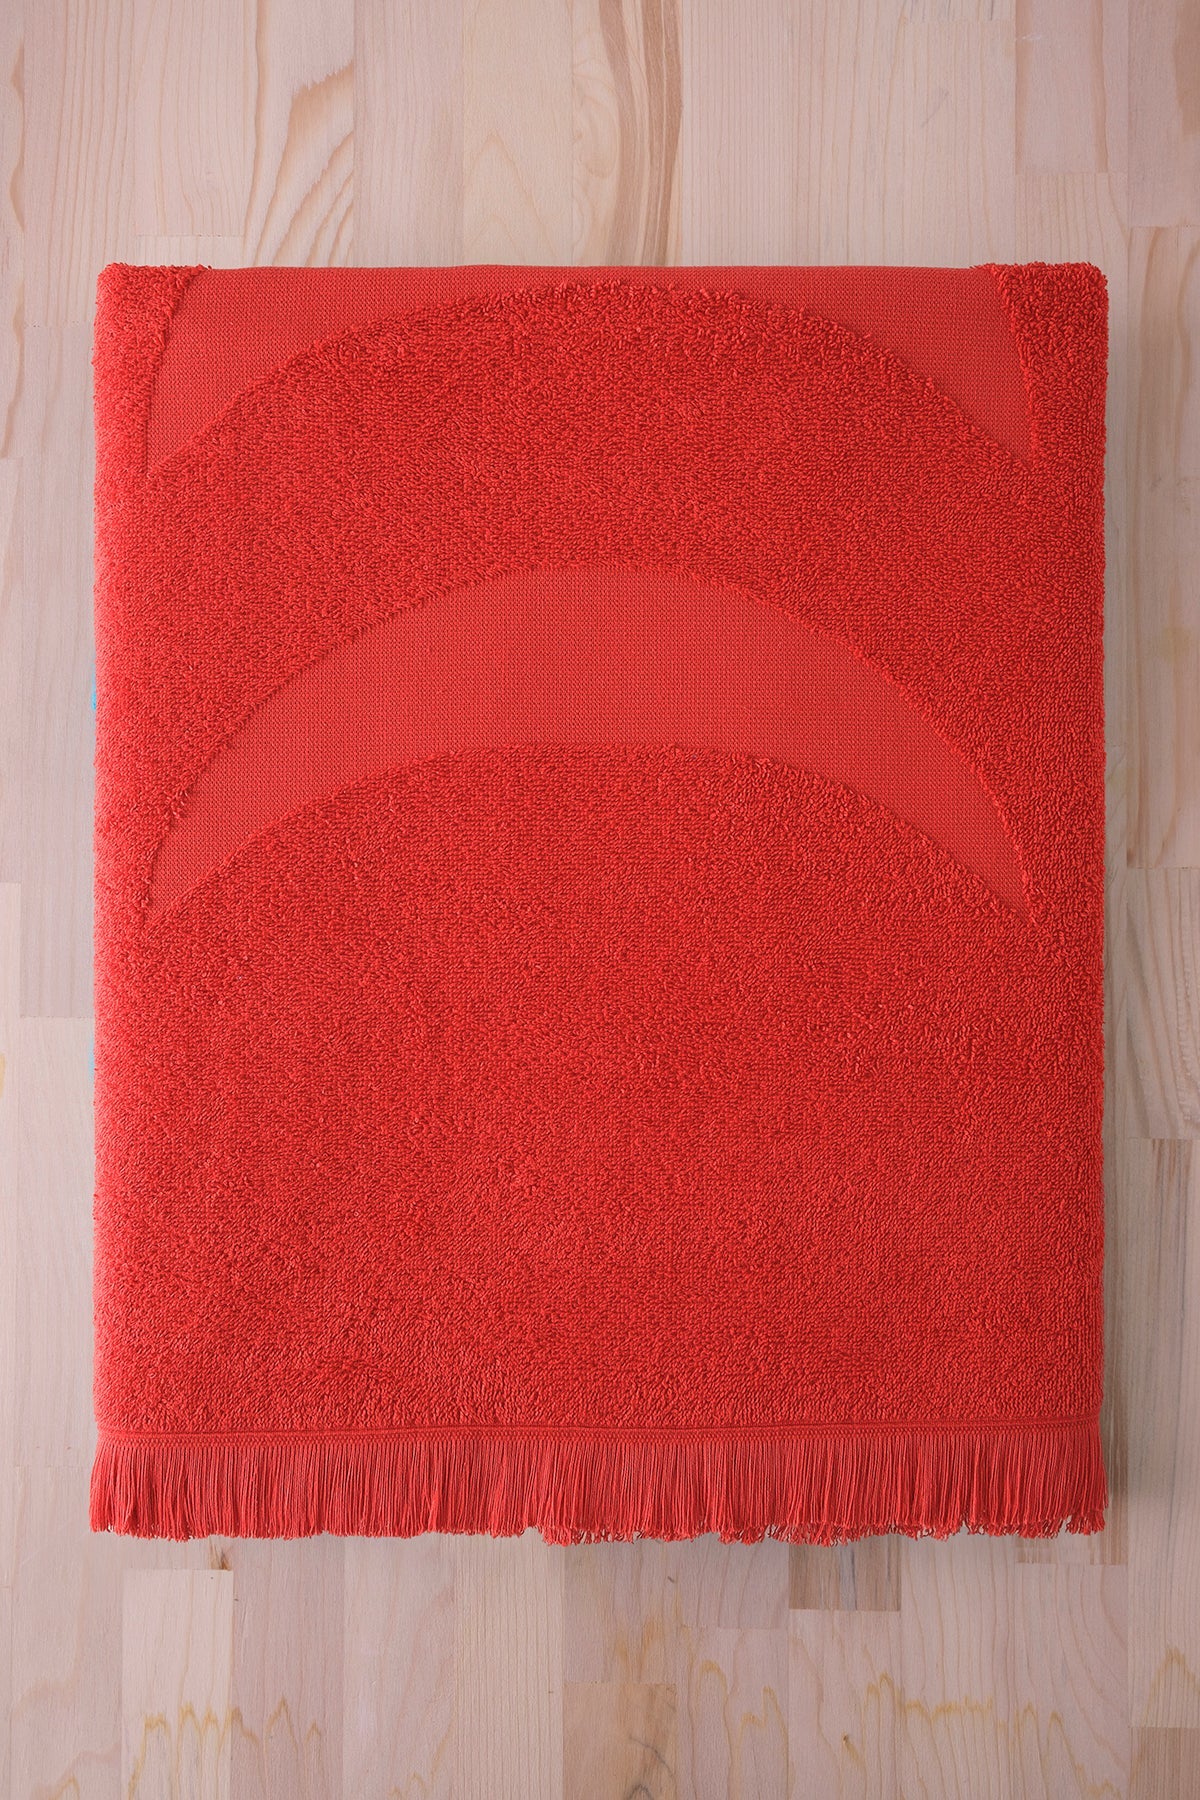 Lua Coral - New Summer Trend 100x180cm. Premium Beach Towel